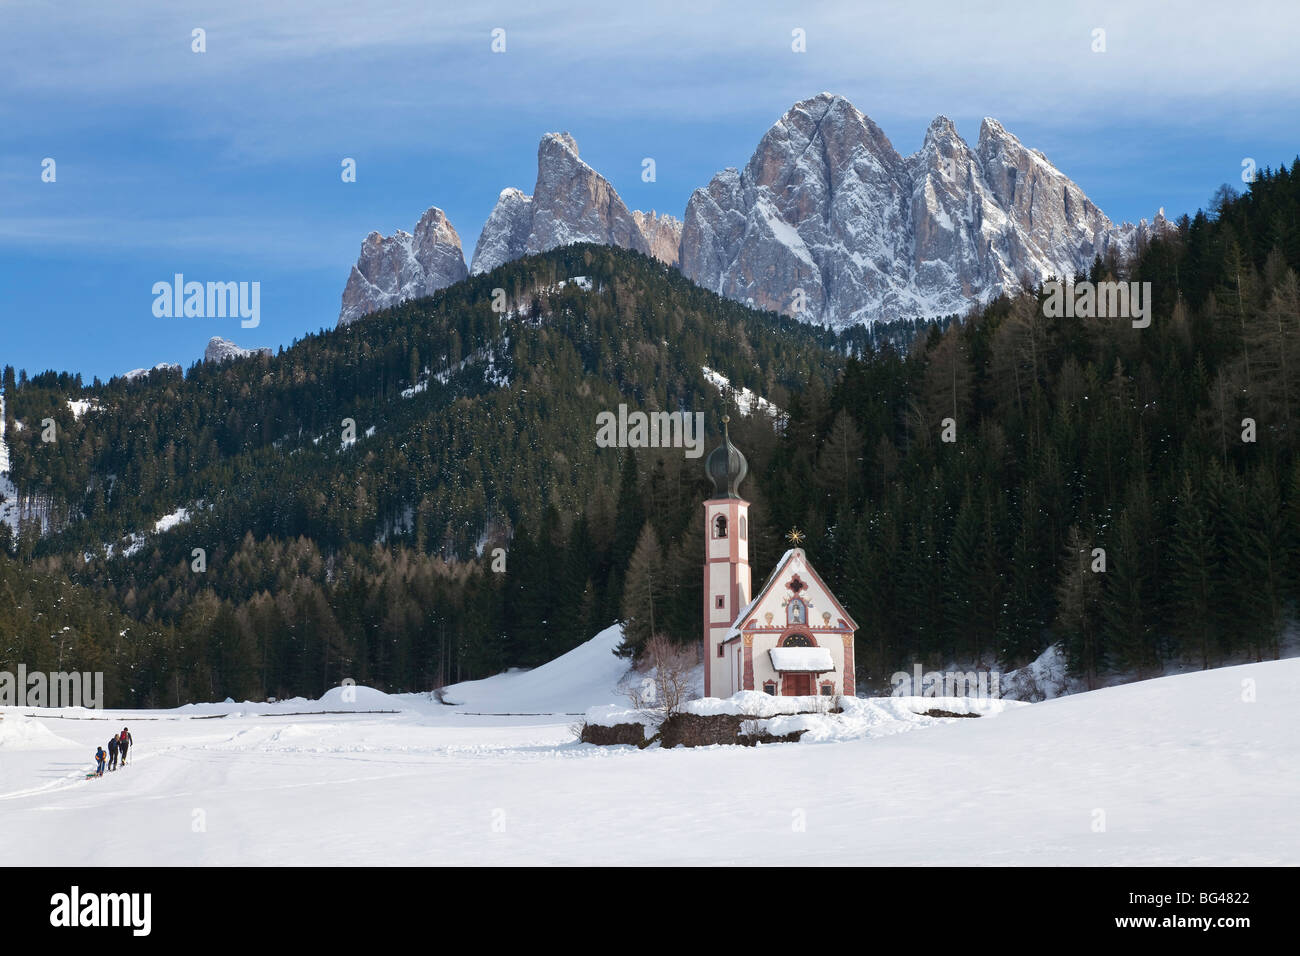 St Johann chiesa in Ranui in Villnoss, Geisler Spitzen (3060m), in Val di Funes, Dolomiti, Trentino-Alto Adige, Italia Foto Stock